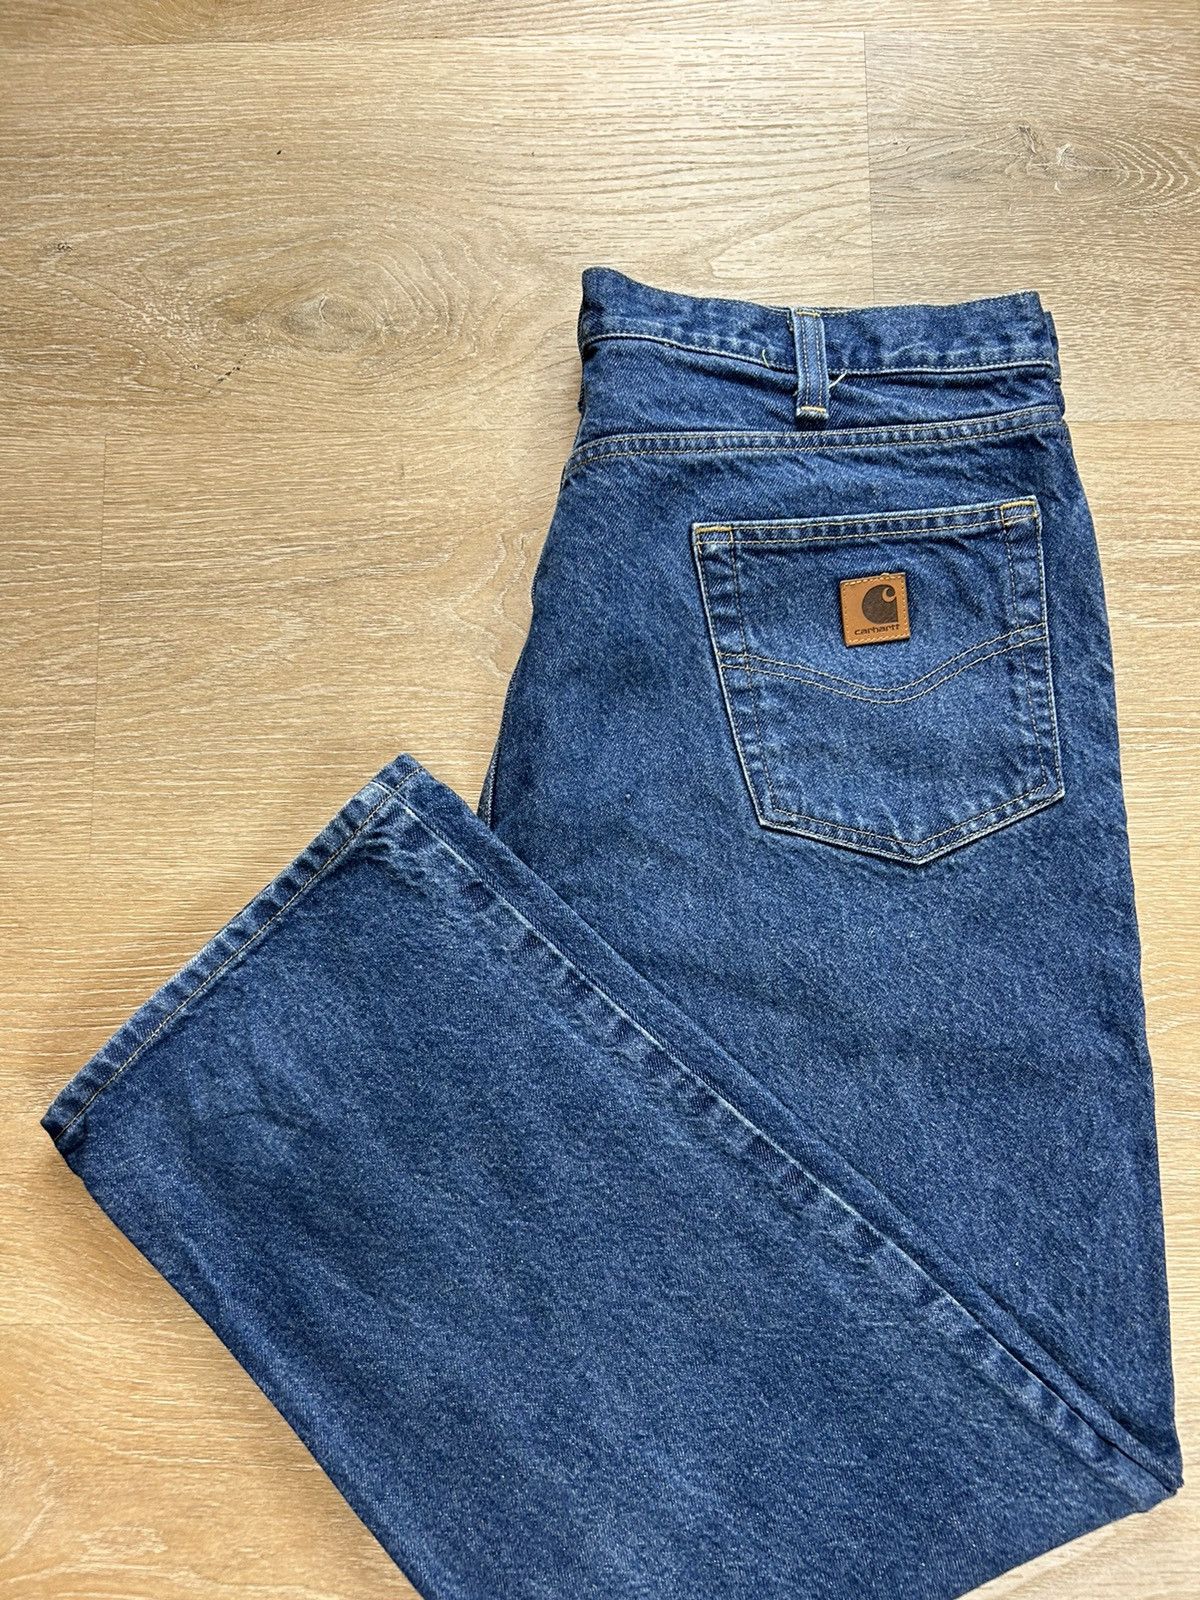 Carhartt Y2K Carhartt Jeans | Grailed